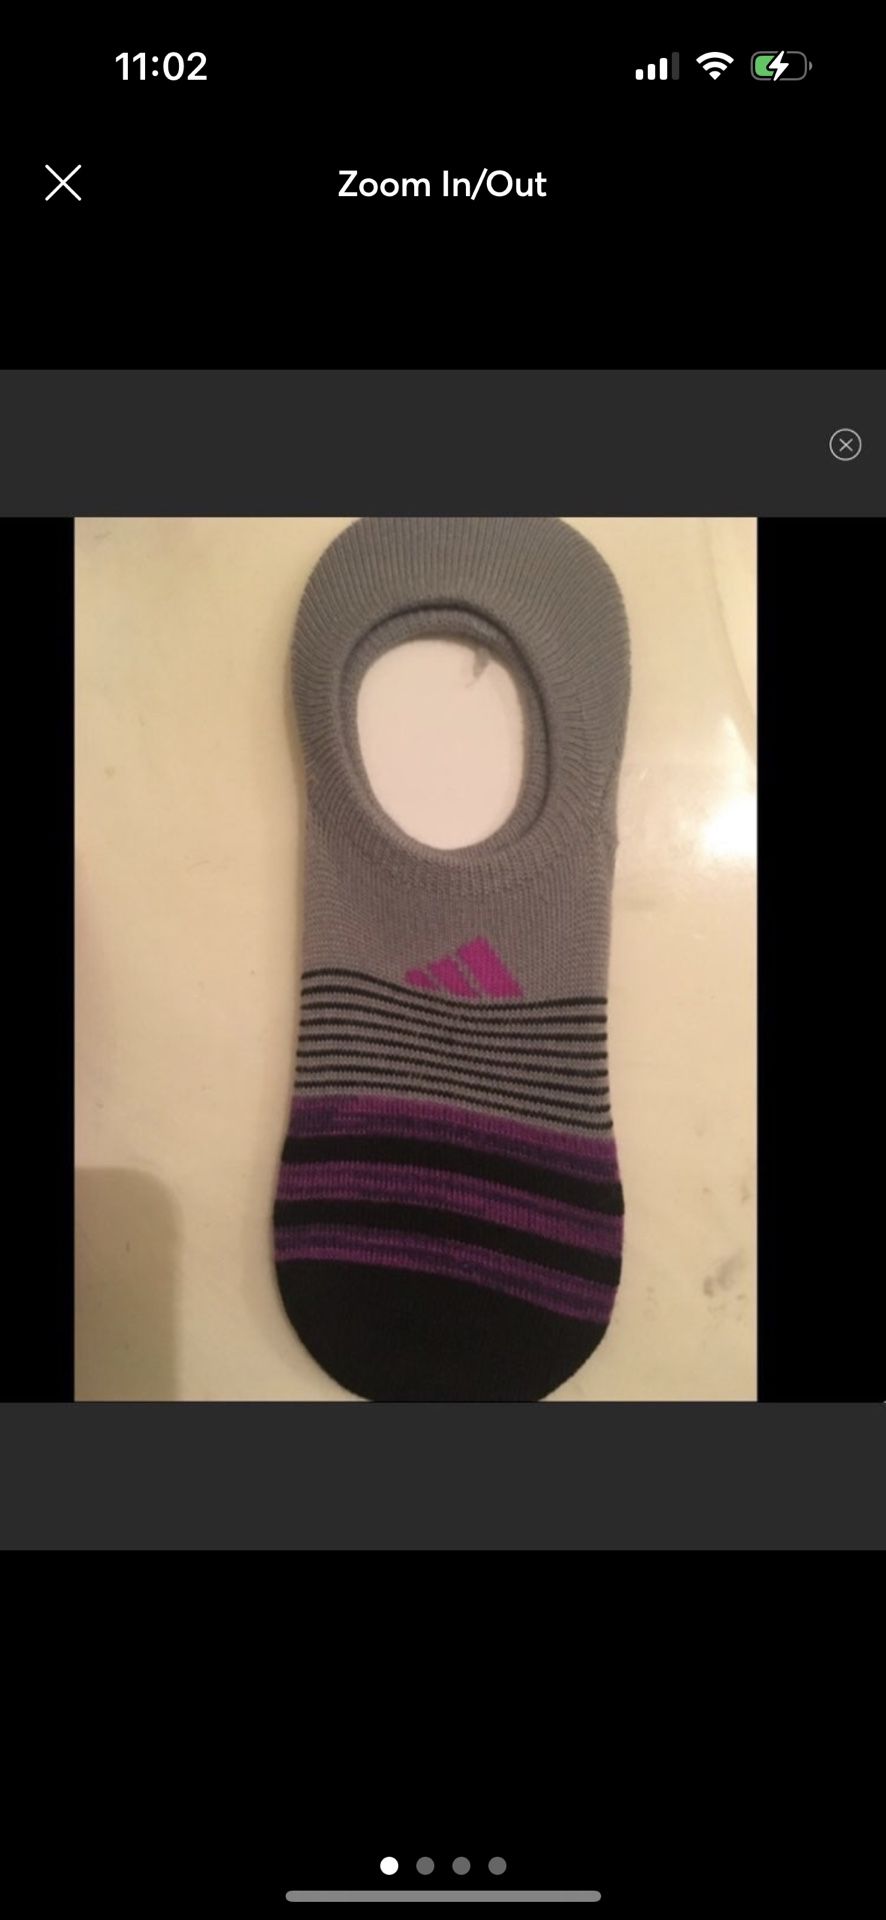 NWT adidas purple socks one size